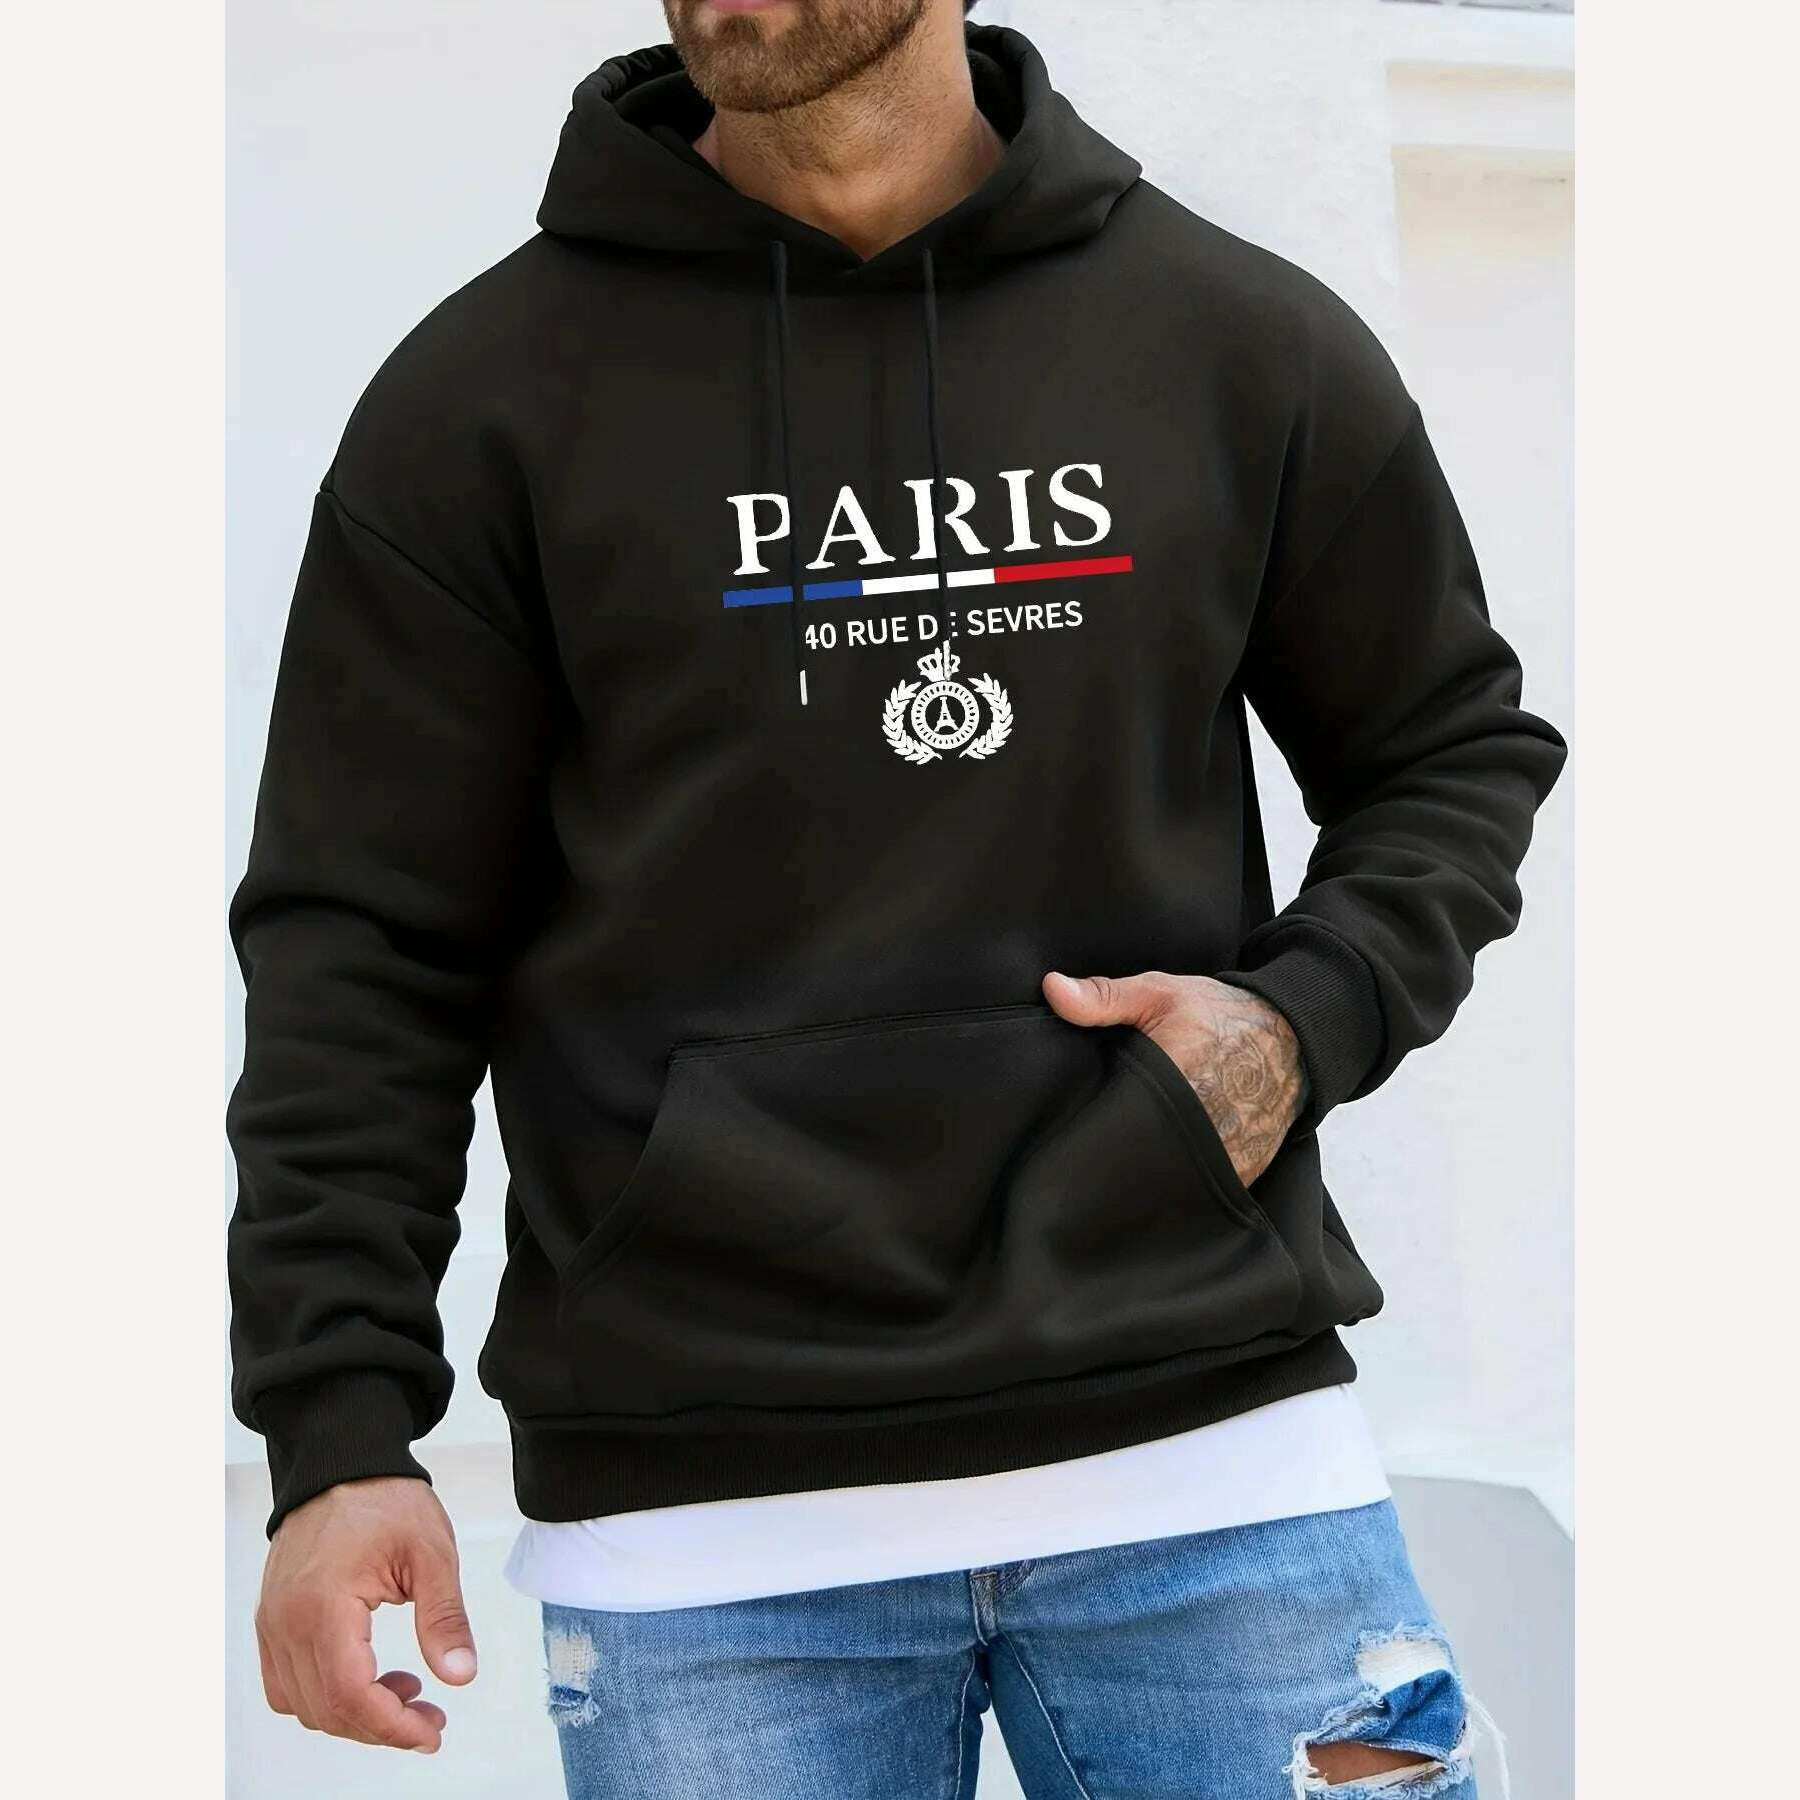 KIMLUD, Men's Autumn Winter Hooded Fashion Sweater Tshirt Tops, A-PARIS-hei / XS, KIMLUD Womens Clothes